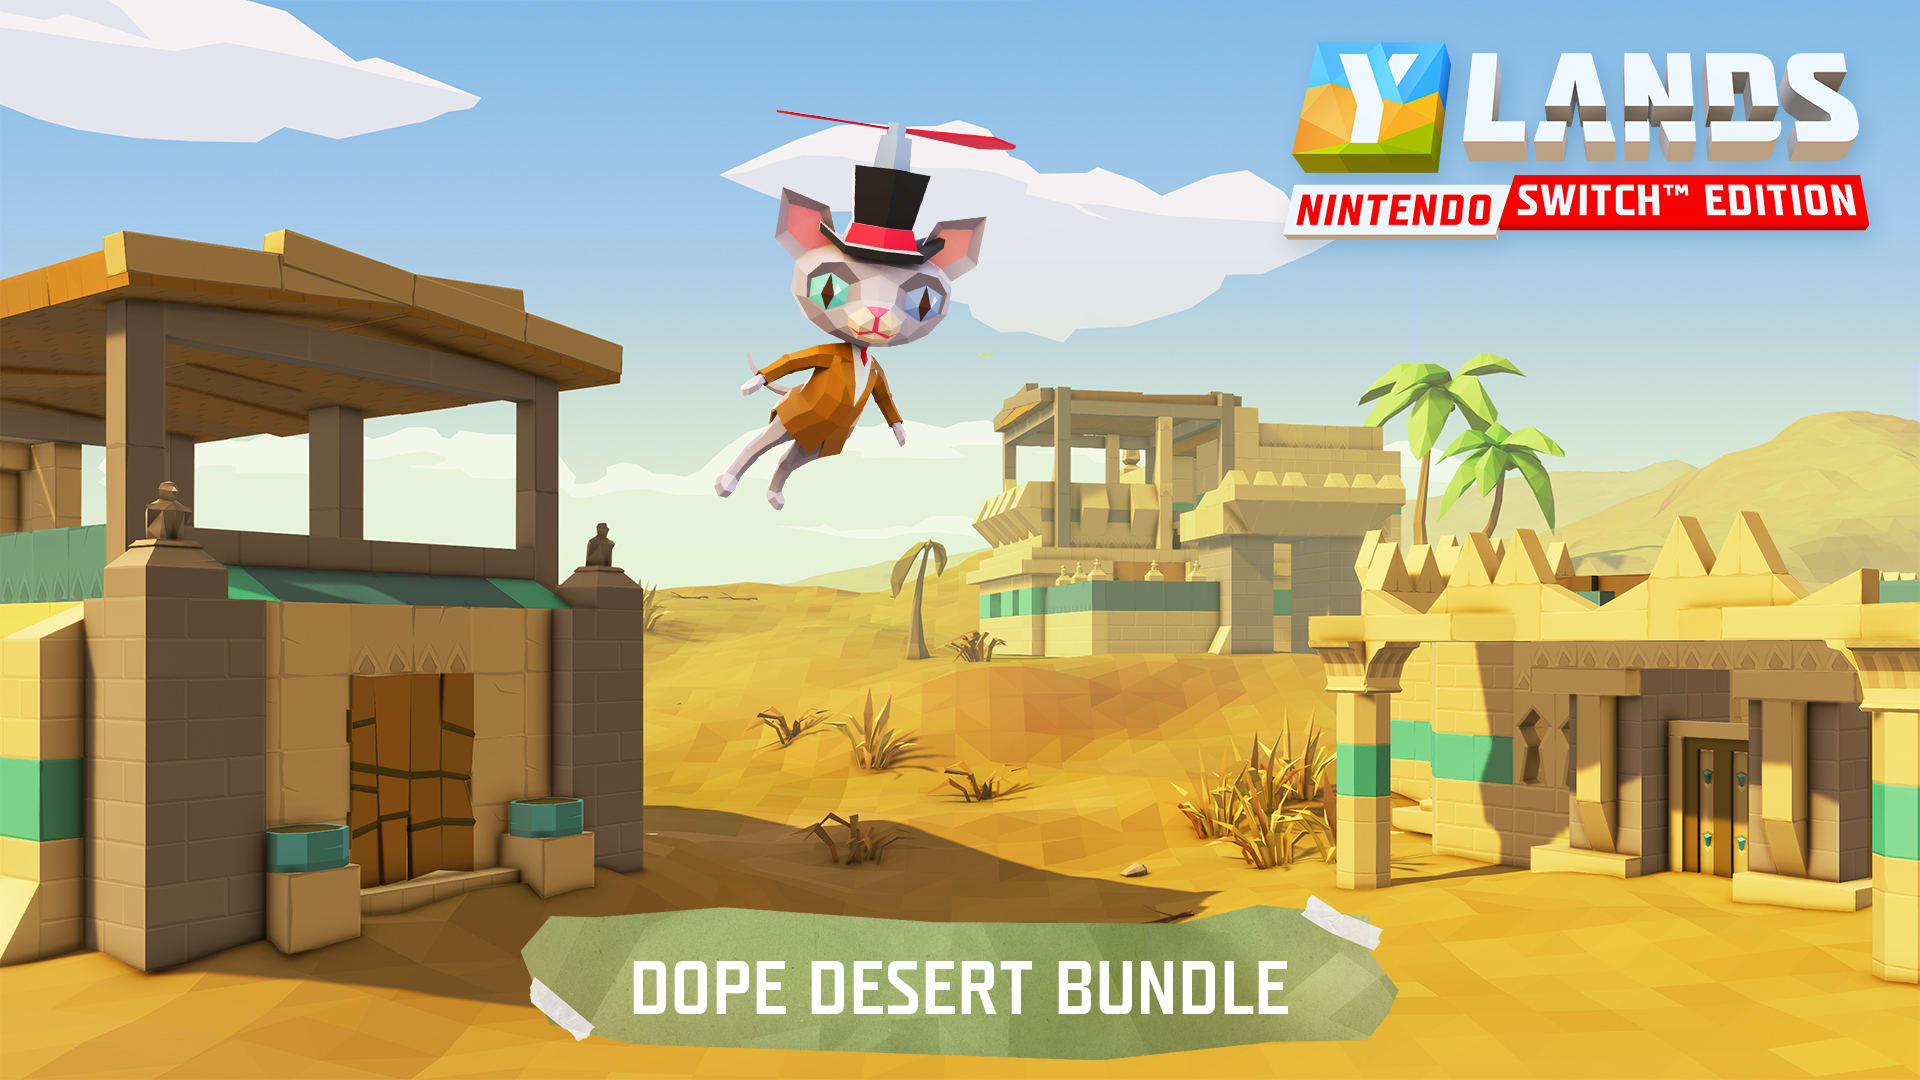 Ylands Nintendo Switch™ Edition - Dope Desert Bundle